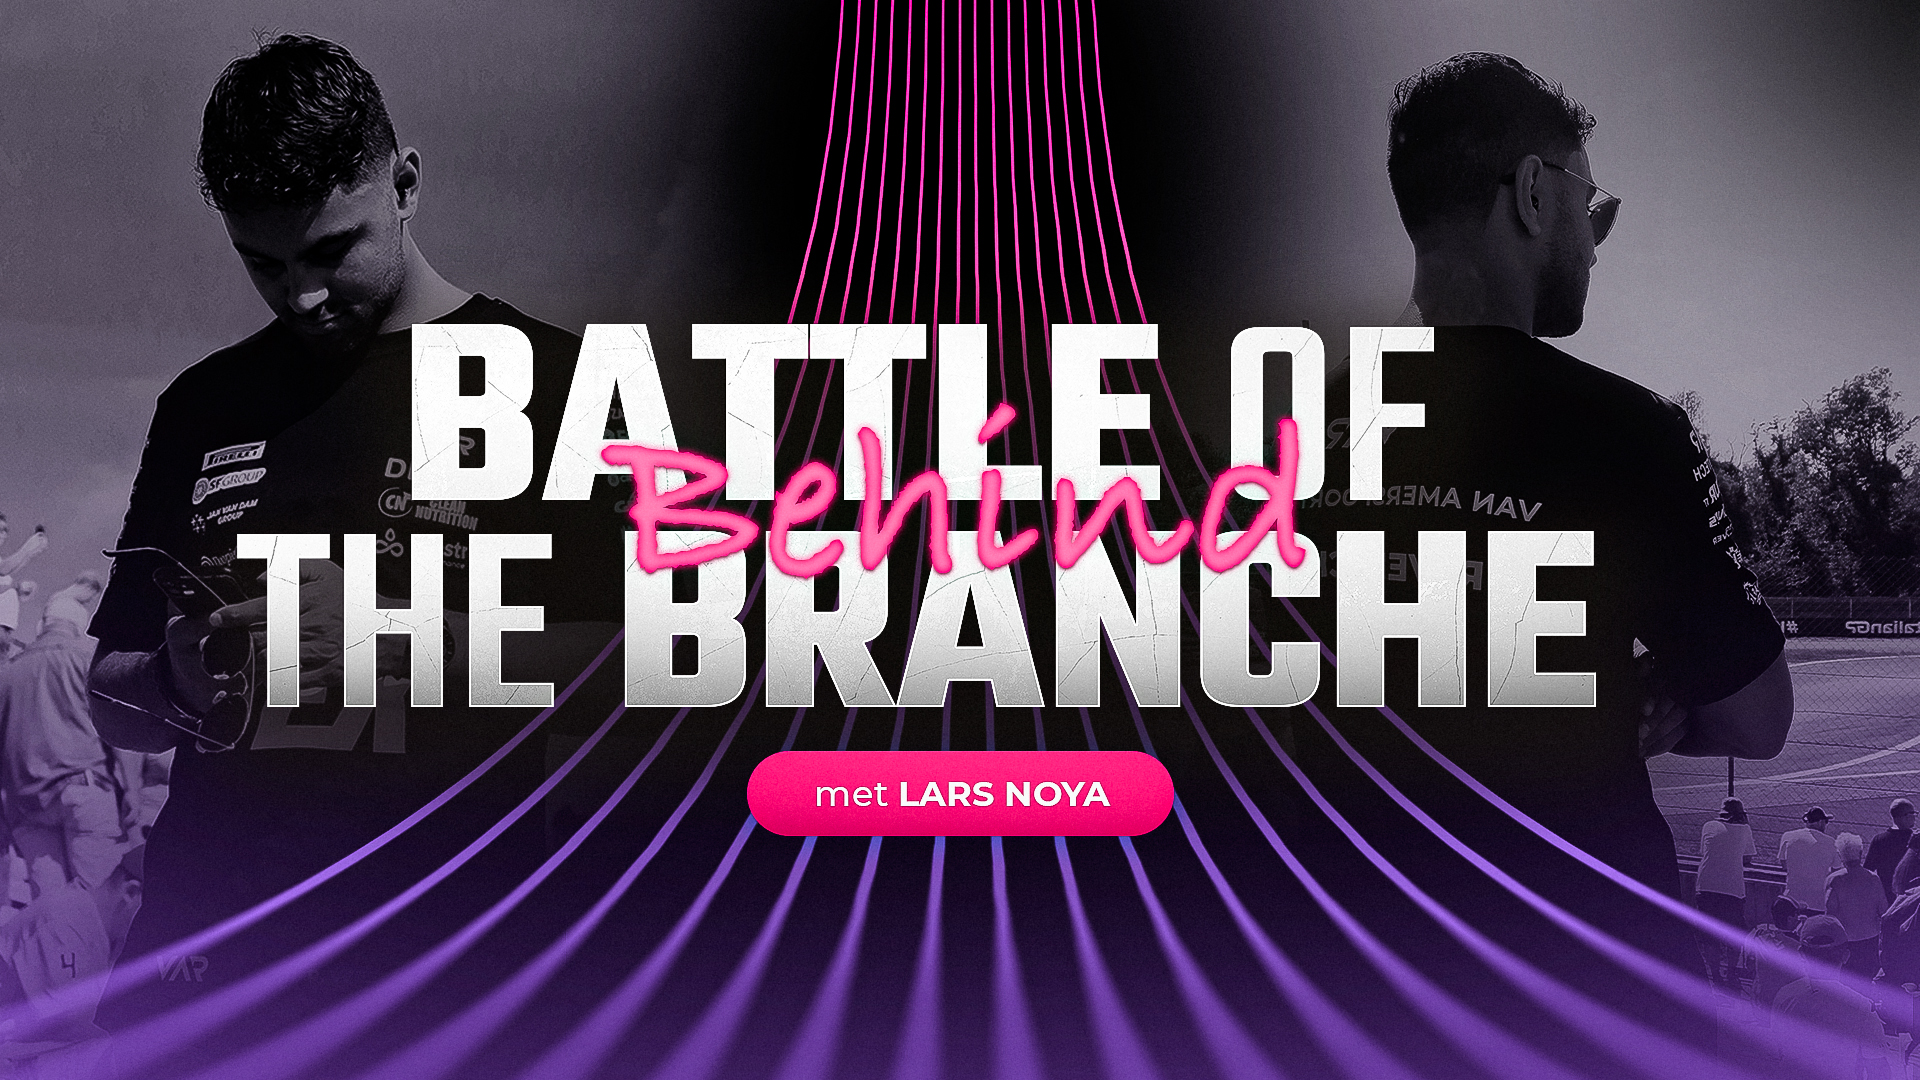 Behind Battle of the Branche - Lars Noya